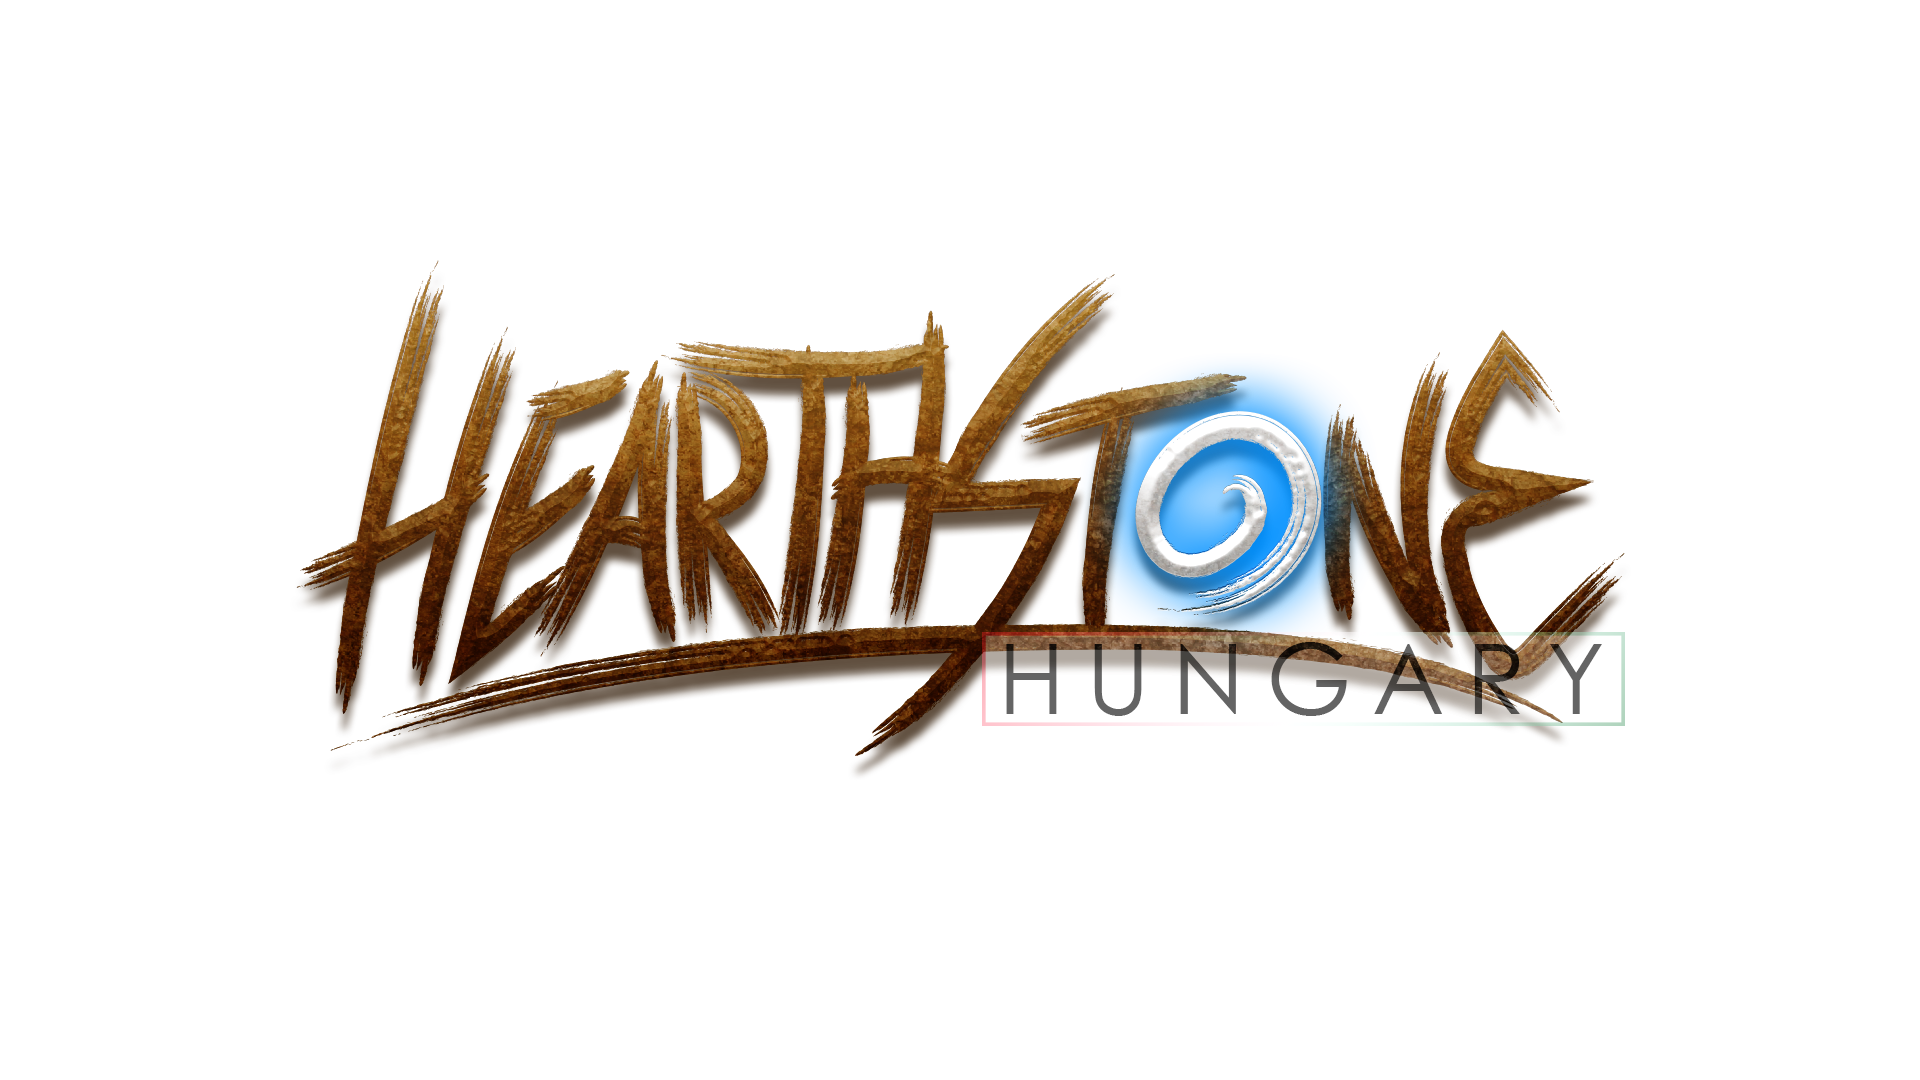 Hearthstone Hungary